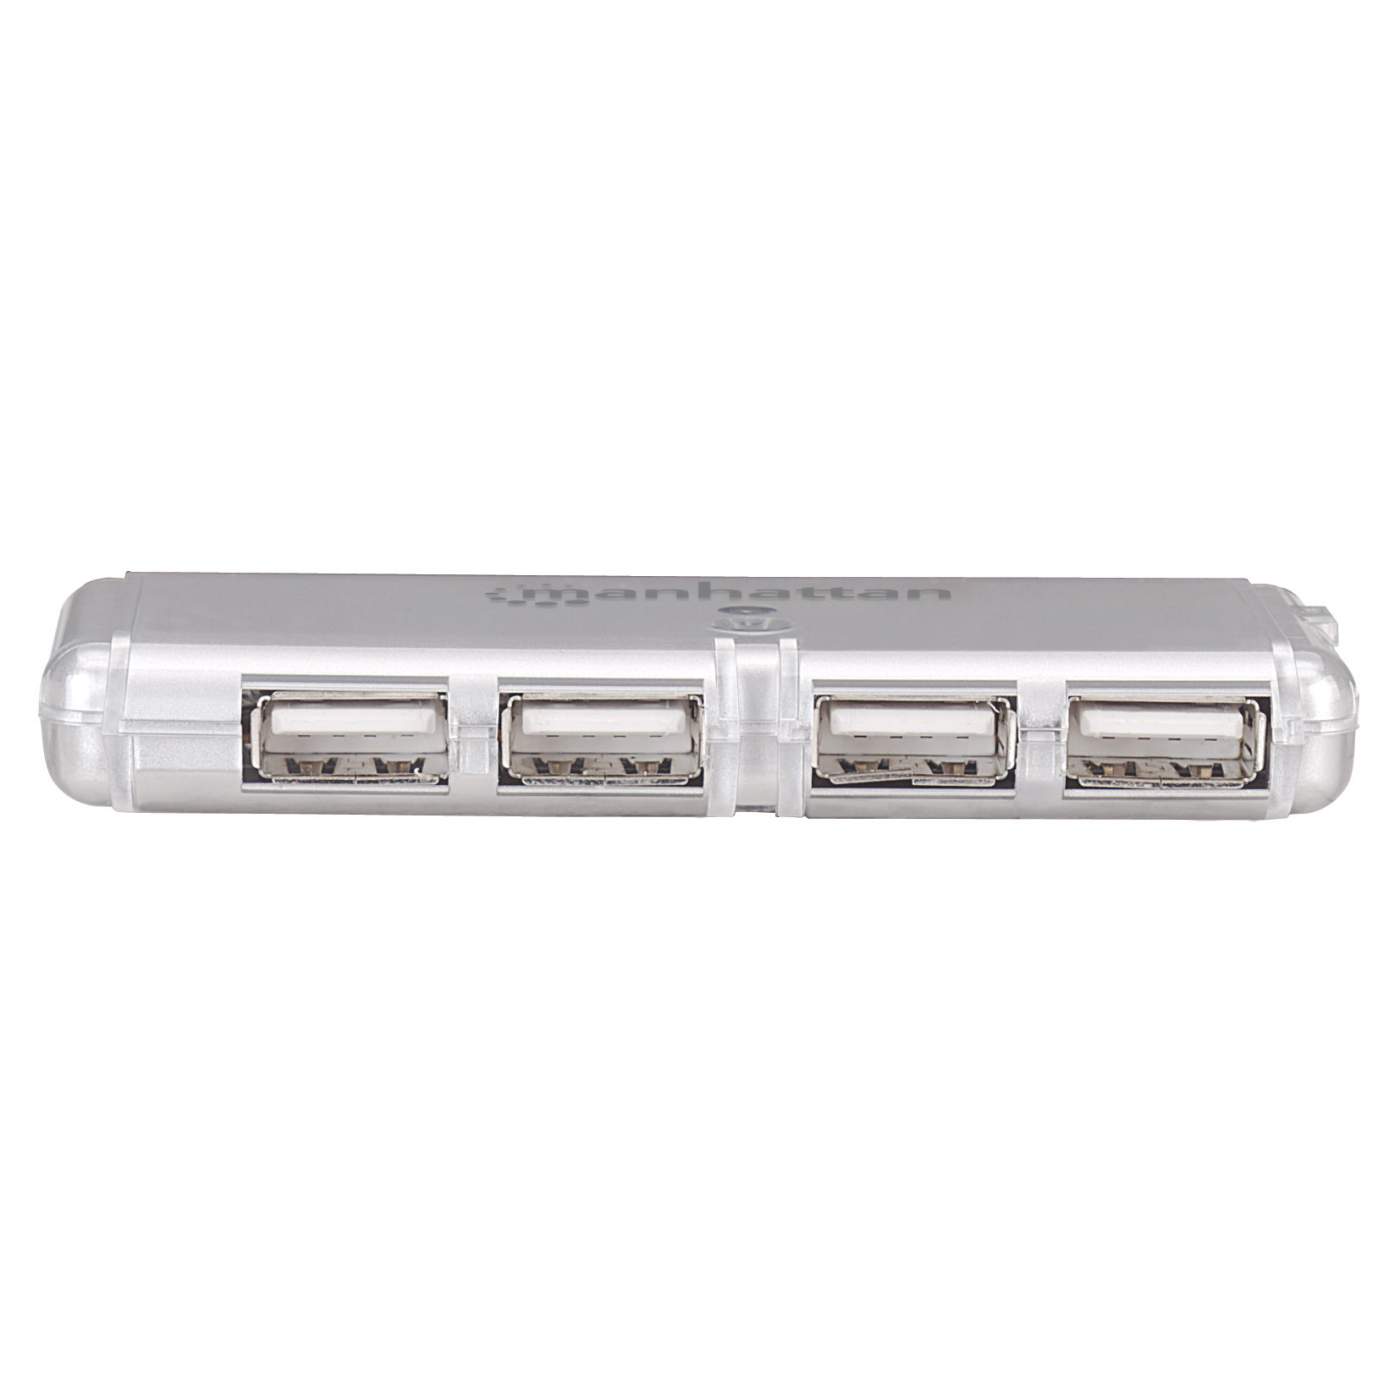 Manhattan 4-Port USB 3.0 / 2.0 Combo Hub (168427)